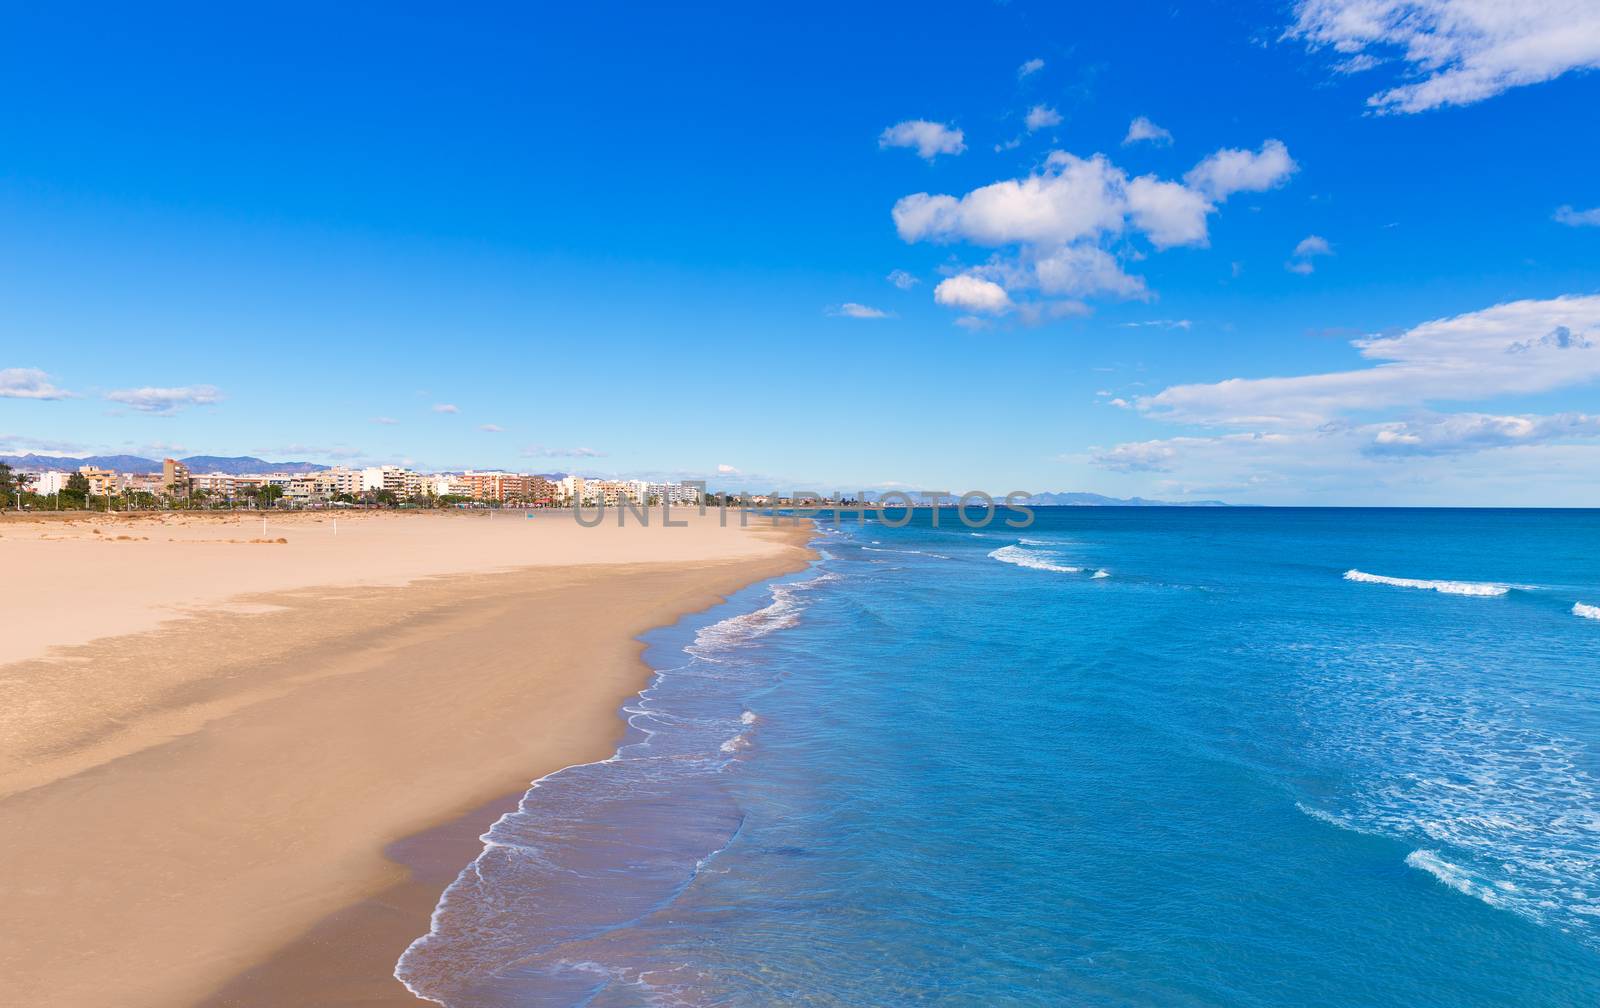 Sagunto beach in Valencia in sunny day in Spain by lunamarina